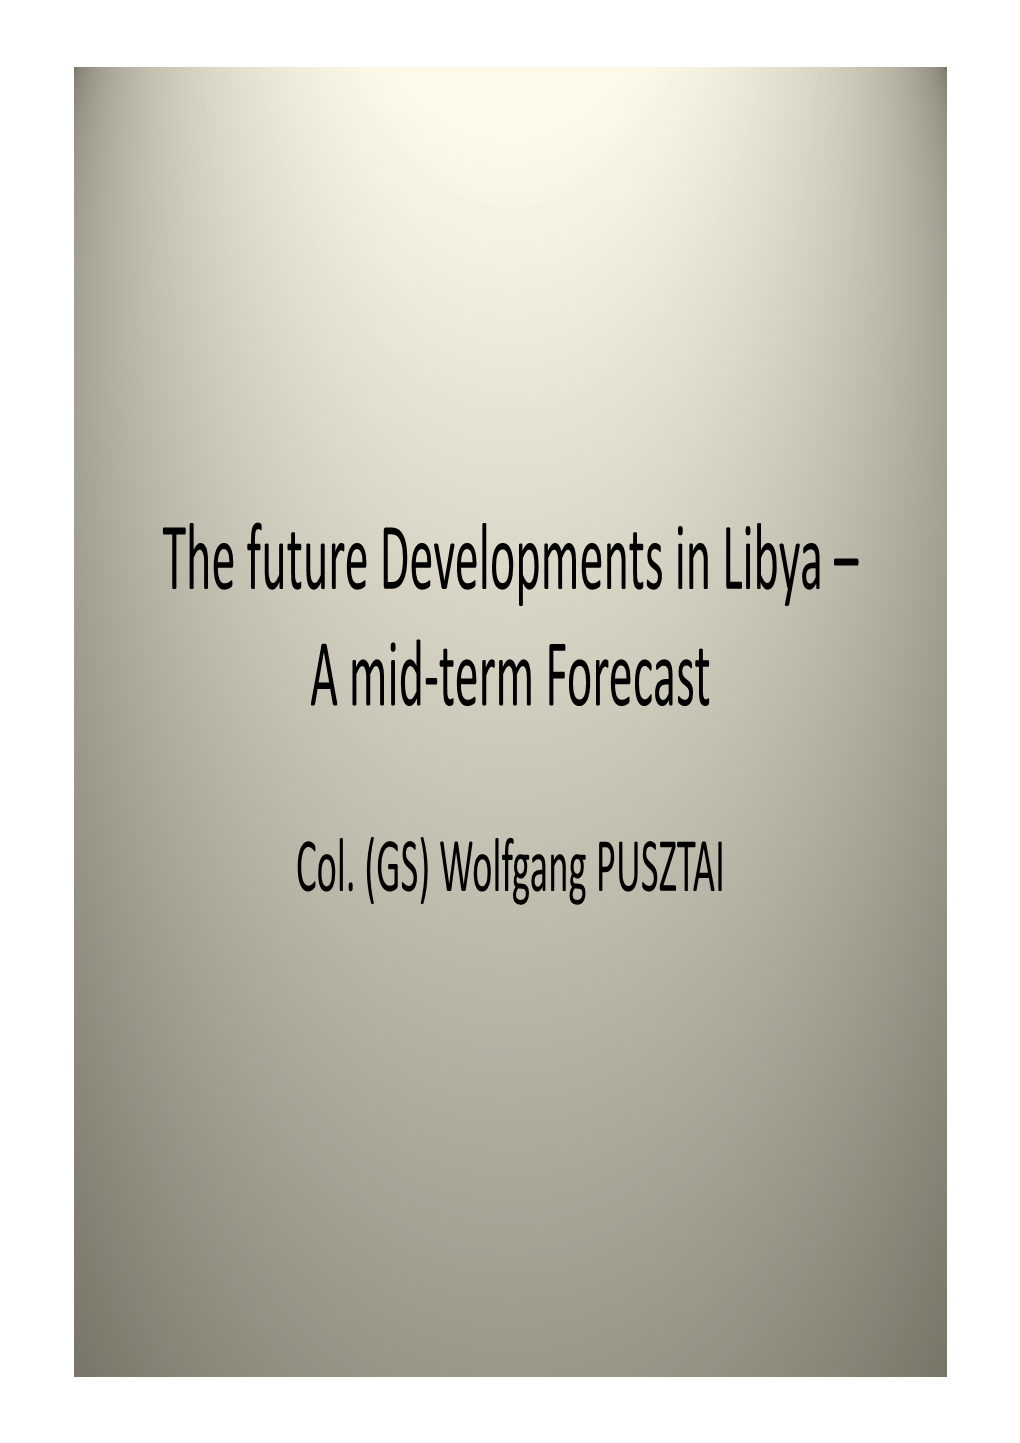 The Future Developments in Libya – a Mid-Term Forecast